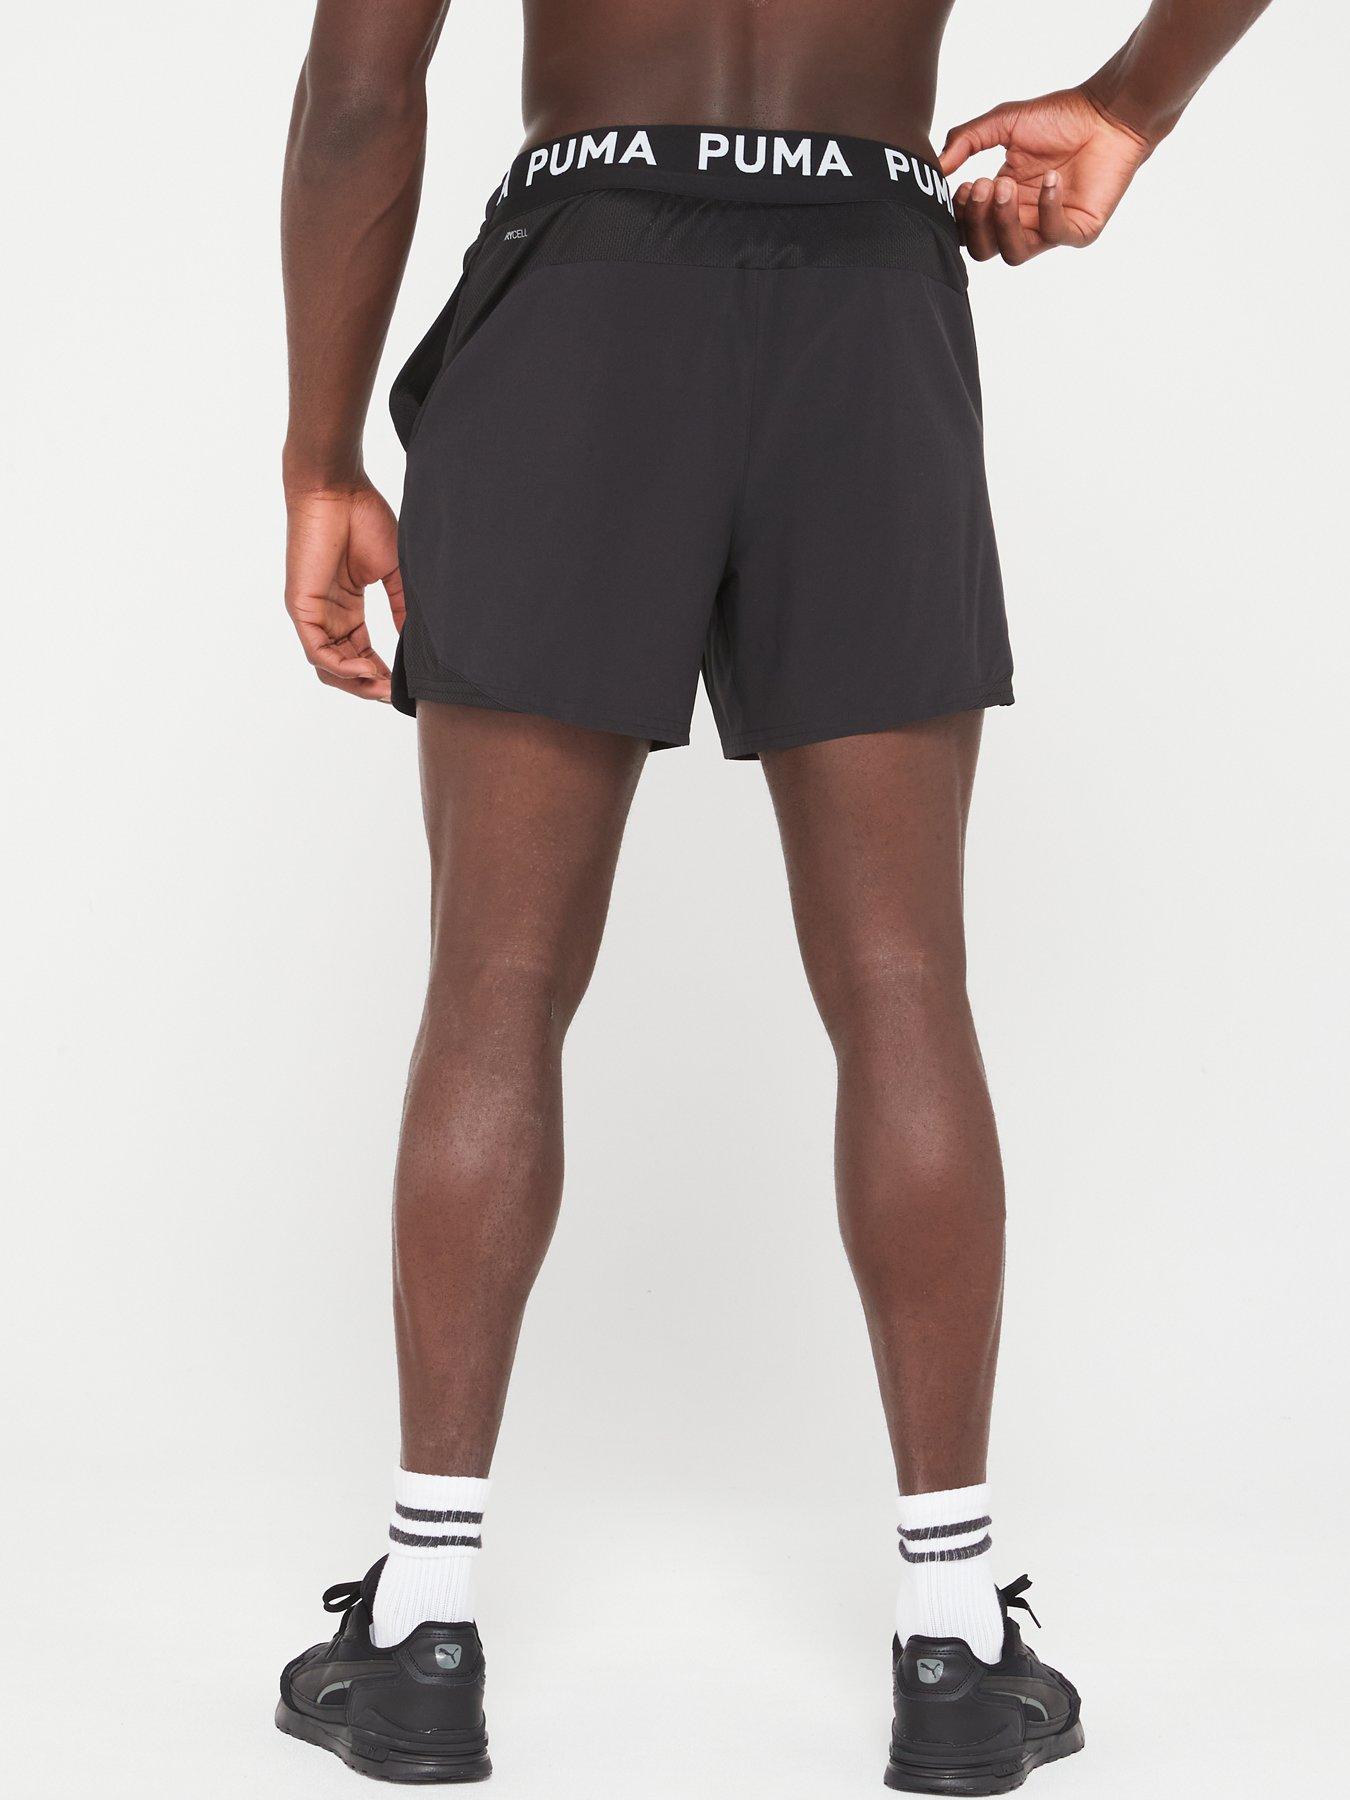 PUMA FIT Ultrabreathe 7 Stretch Woven Men's Training Shorts